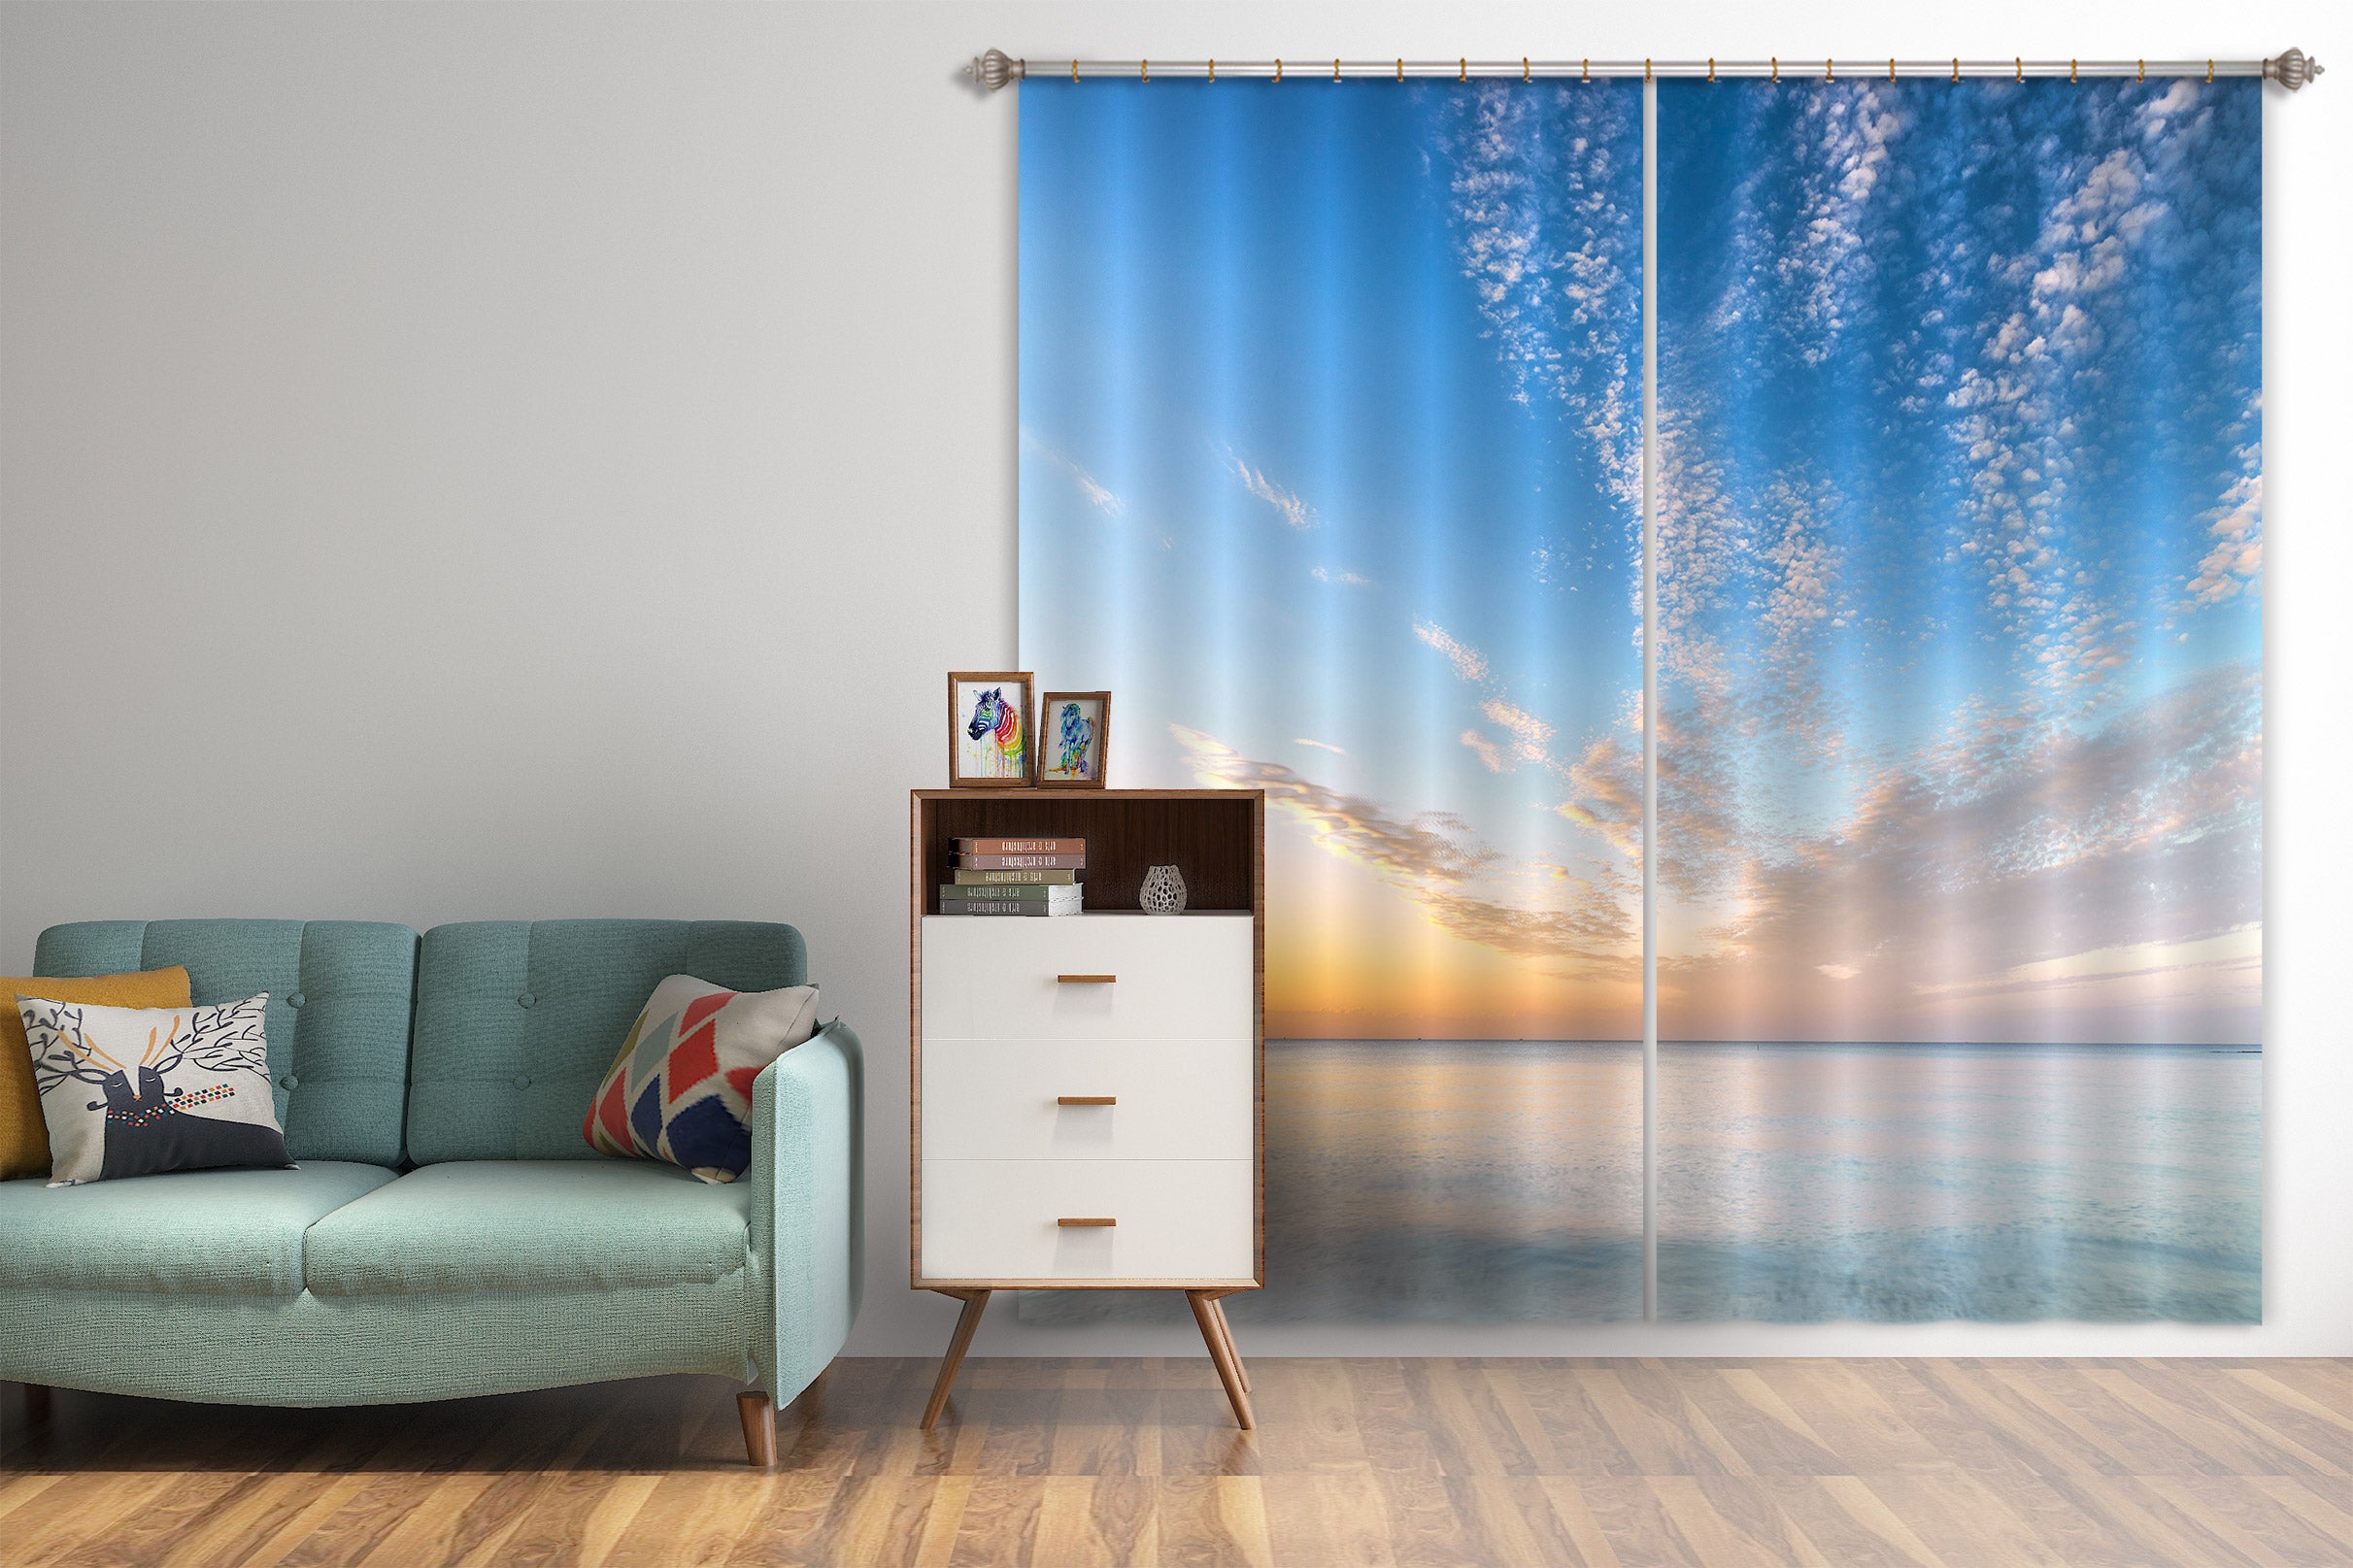 3D Sunset Sea 022 Assaf Frank Curtain Curtains Drapes